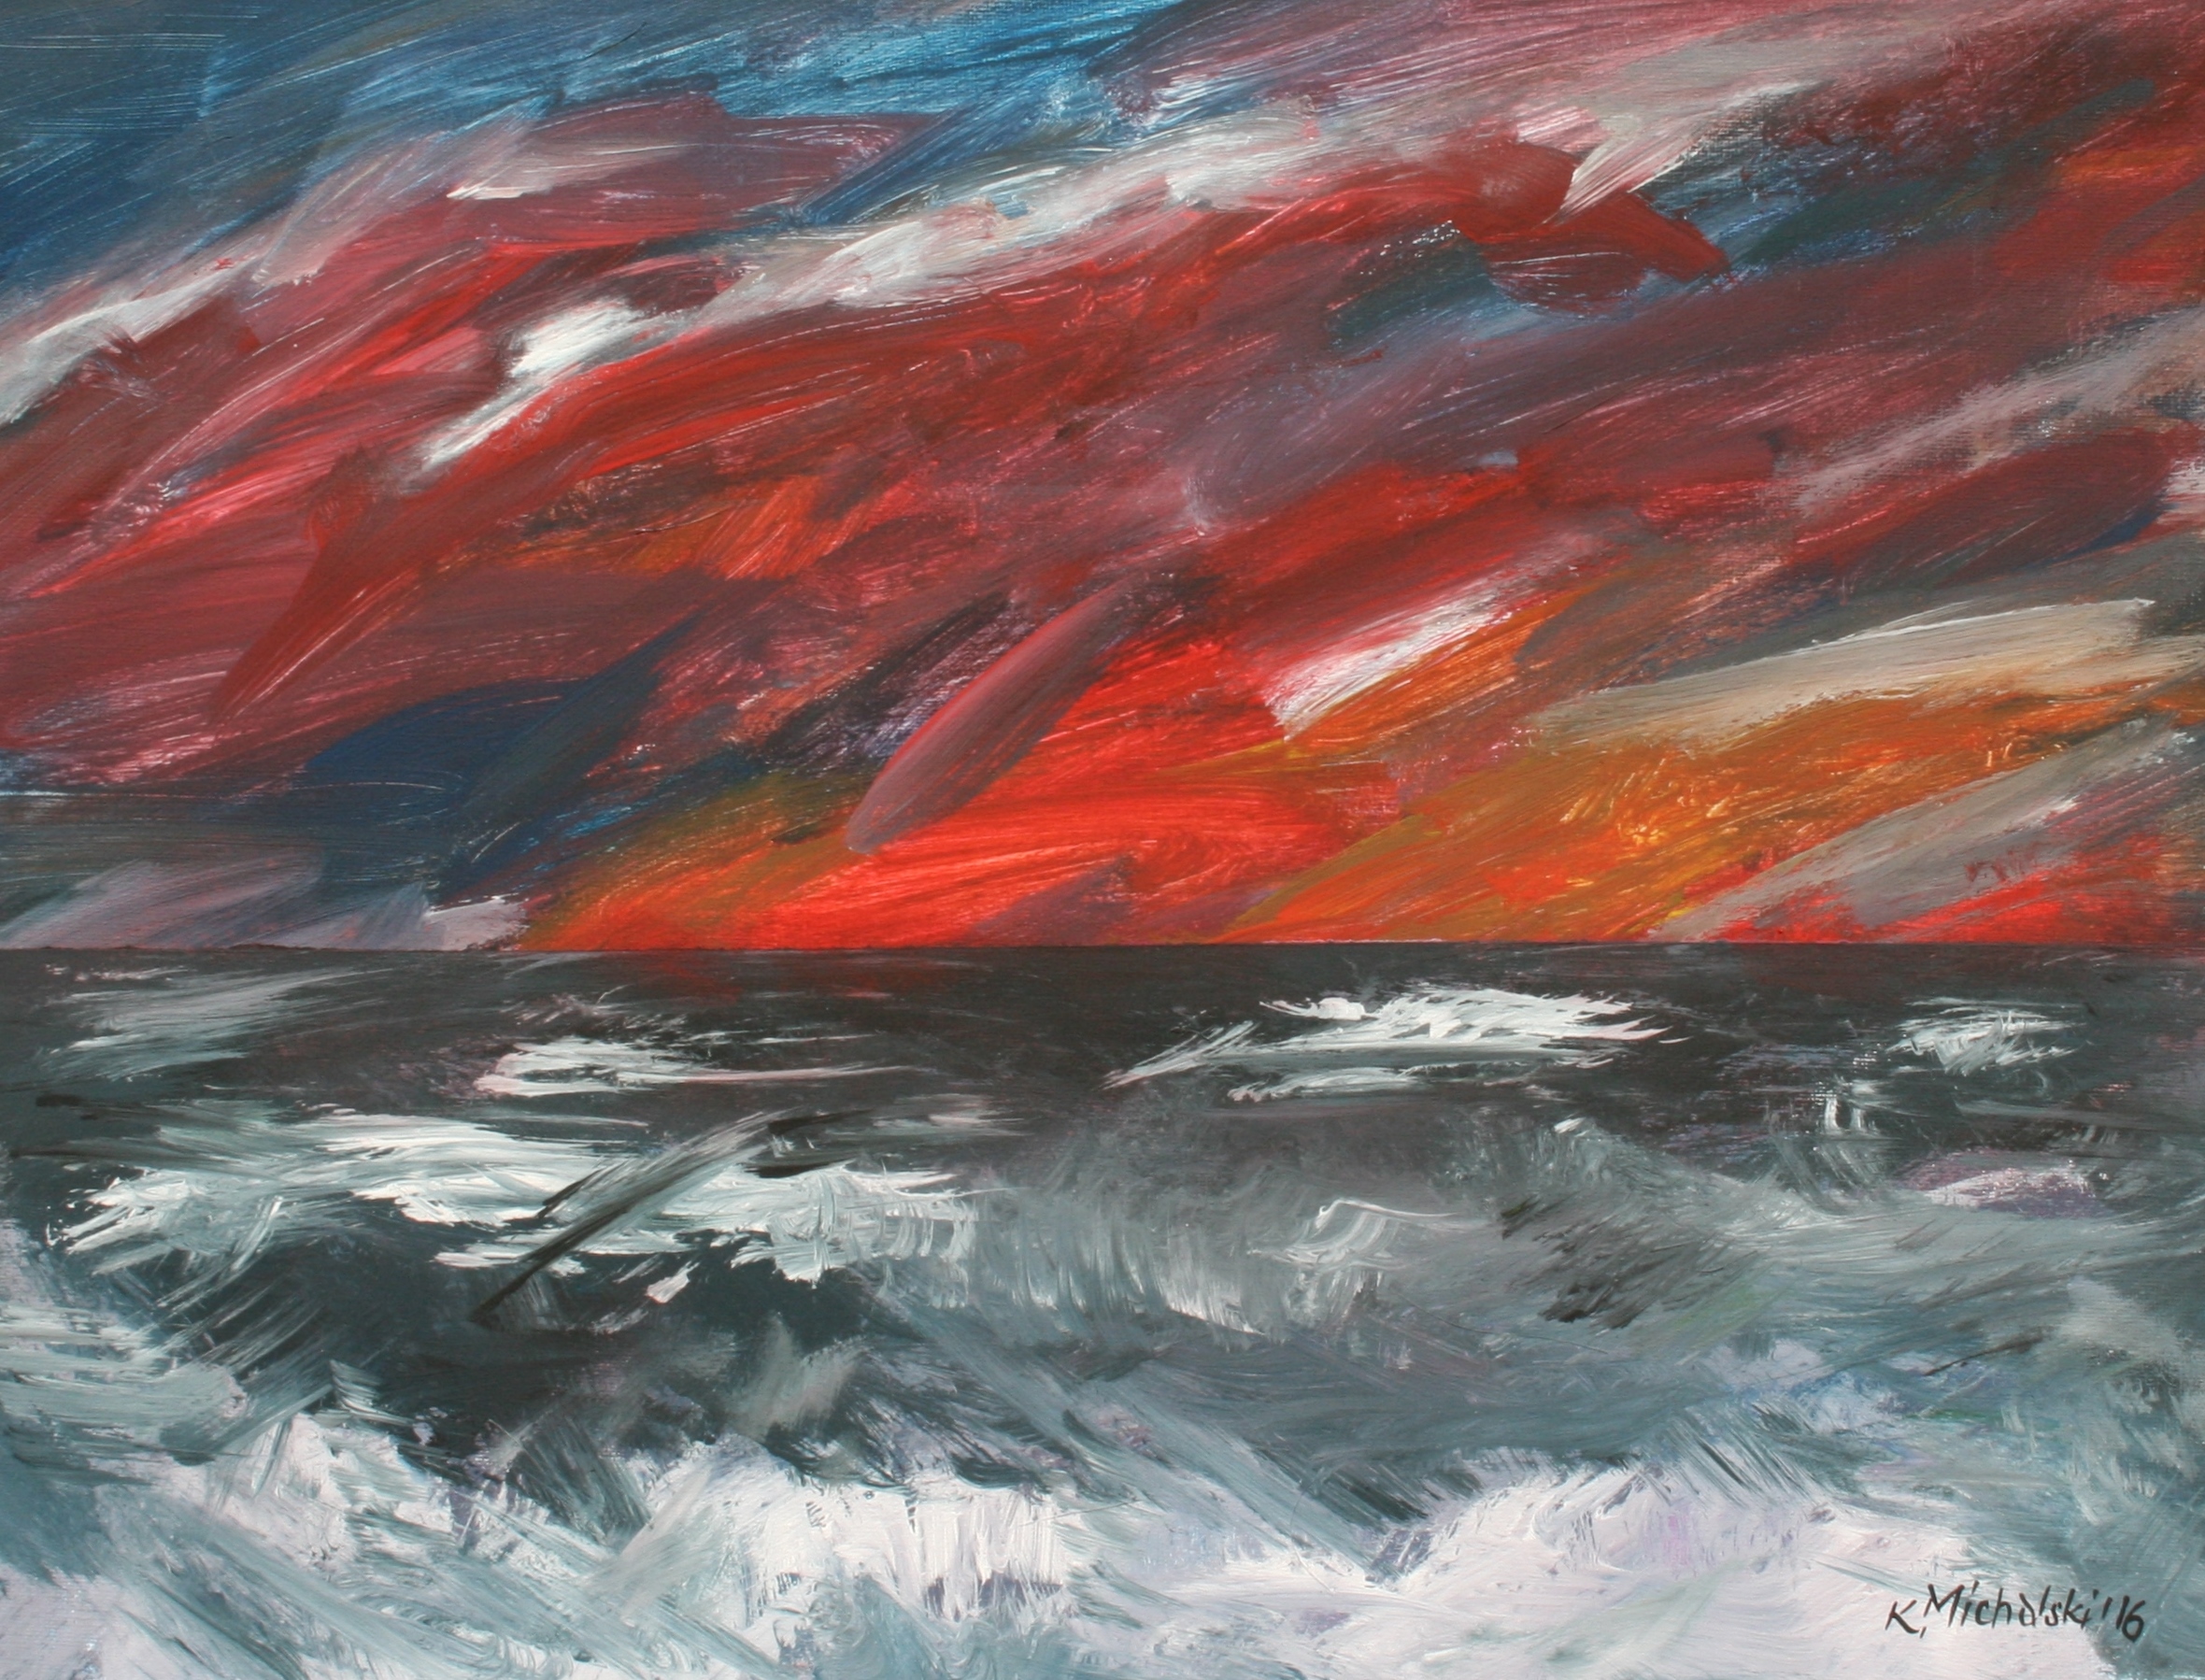 Unwetter am Meer, 2016, 40 x 50, Acryl auf Leinwand